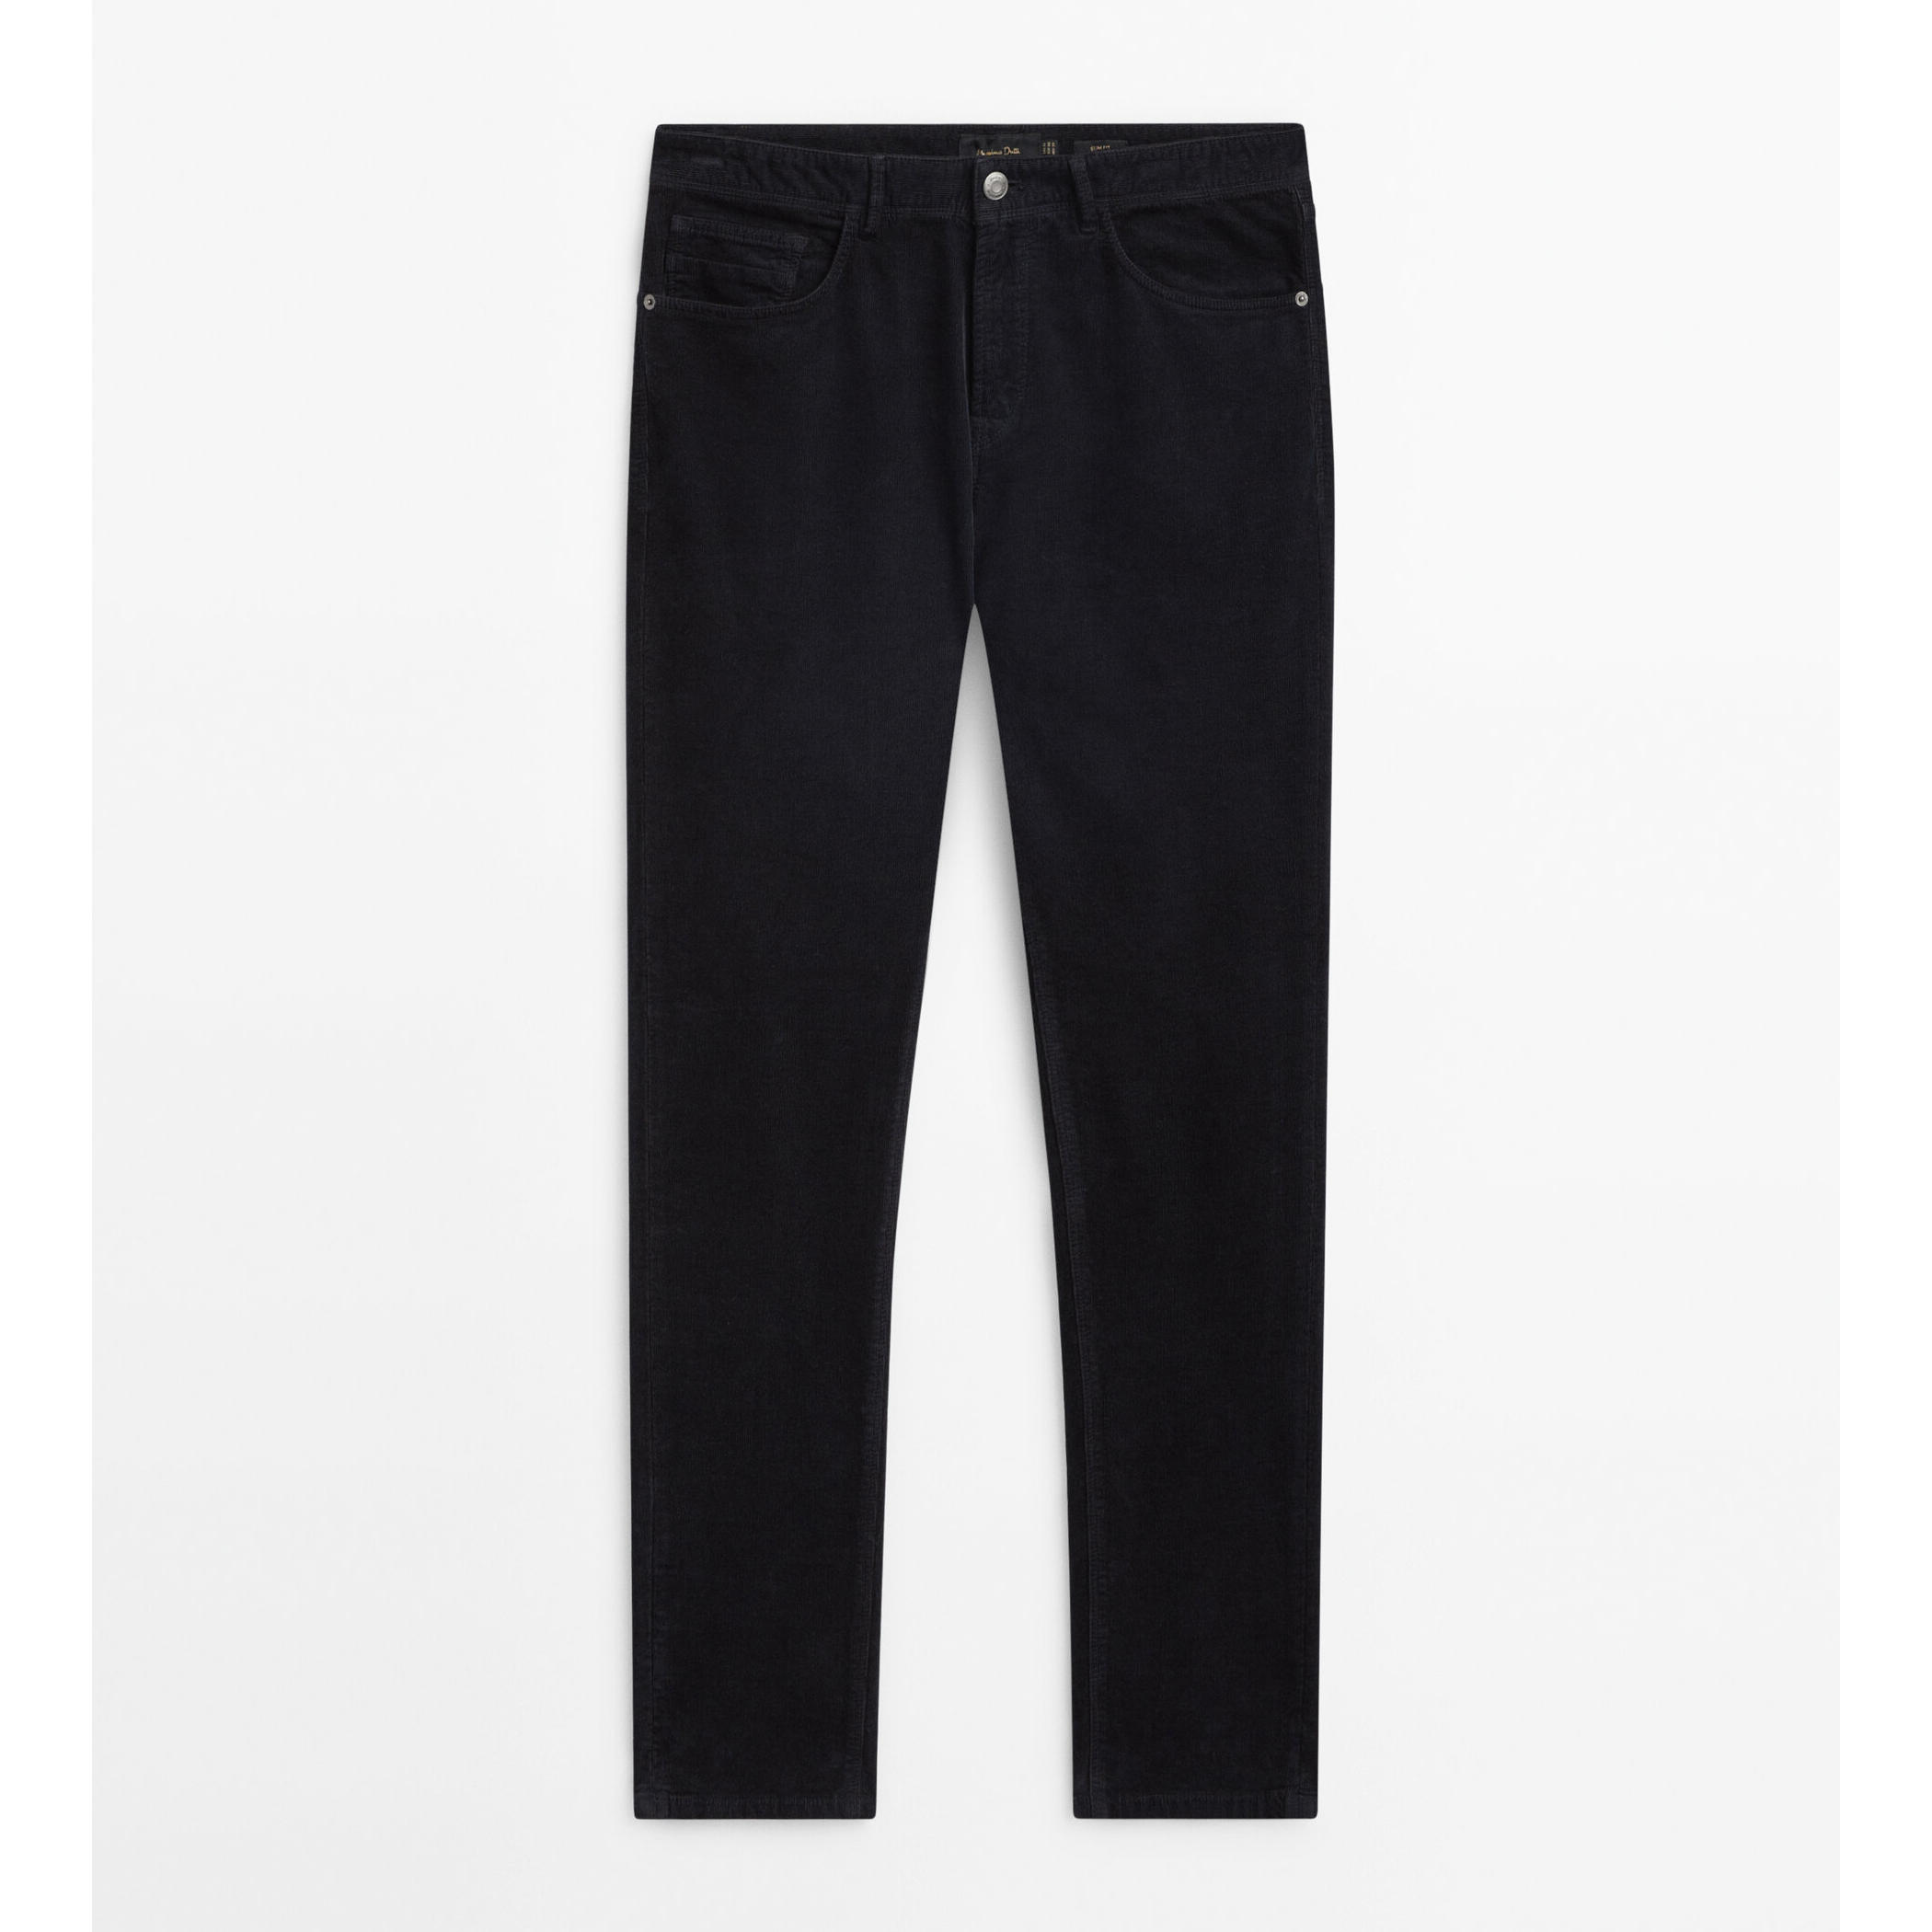 Джинсовые брюки Massimo Dutti Tapered-fit needlecord, темно-синий джинсовые брюки massimo dutti tapered fit needlecord темно синий